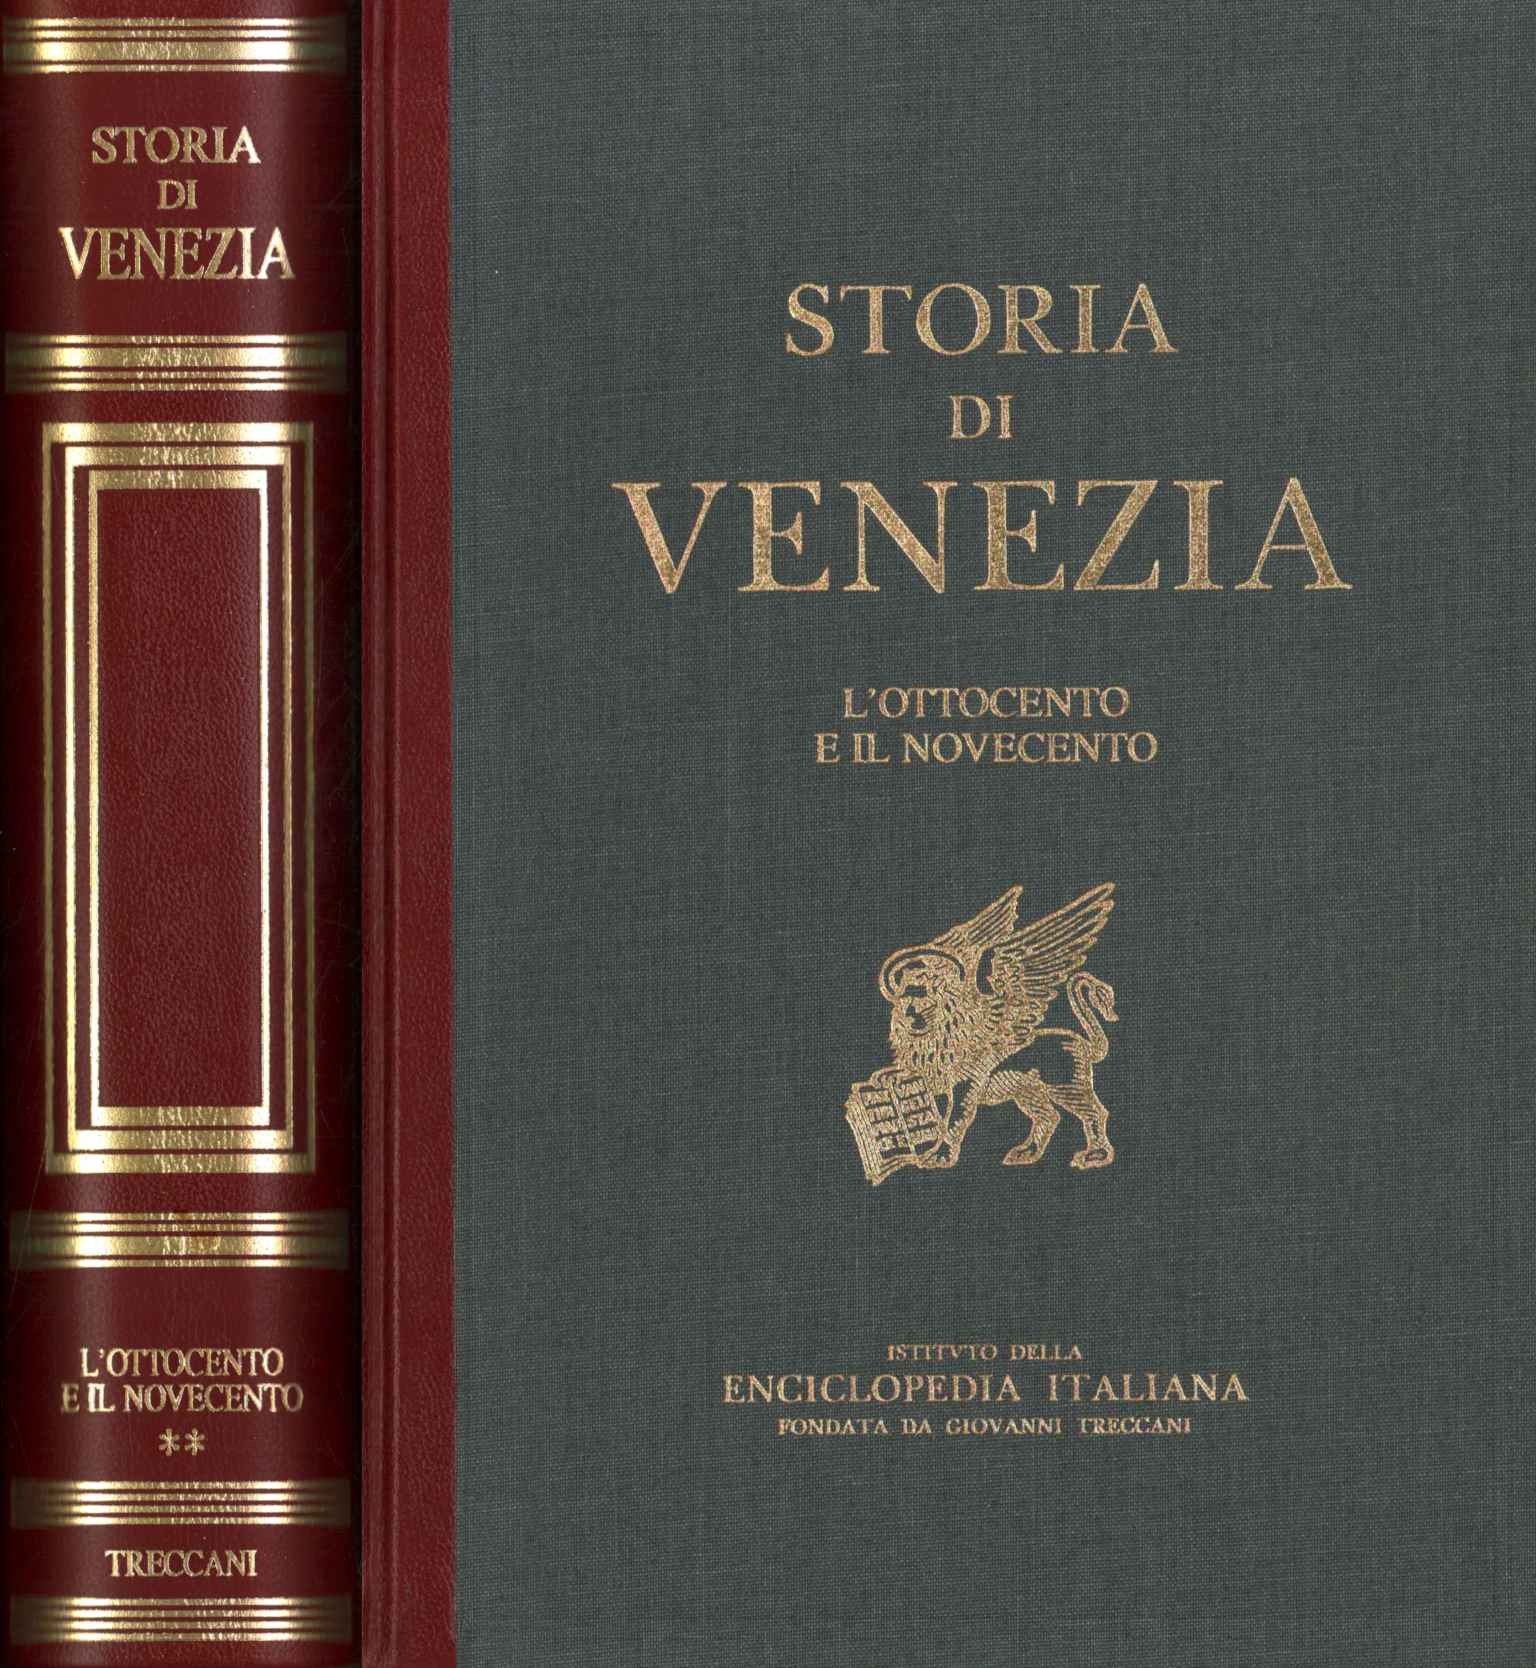 History of Venice. The nineteenth century